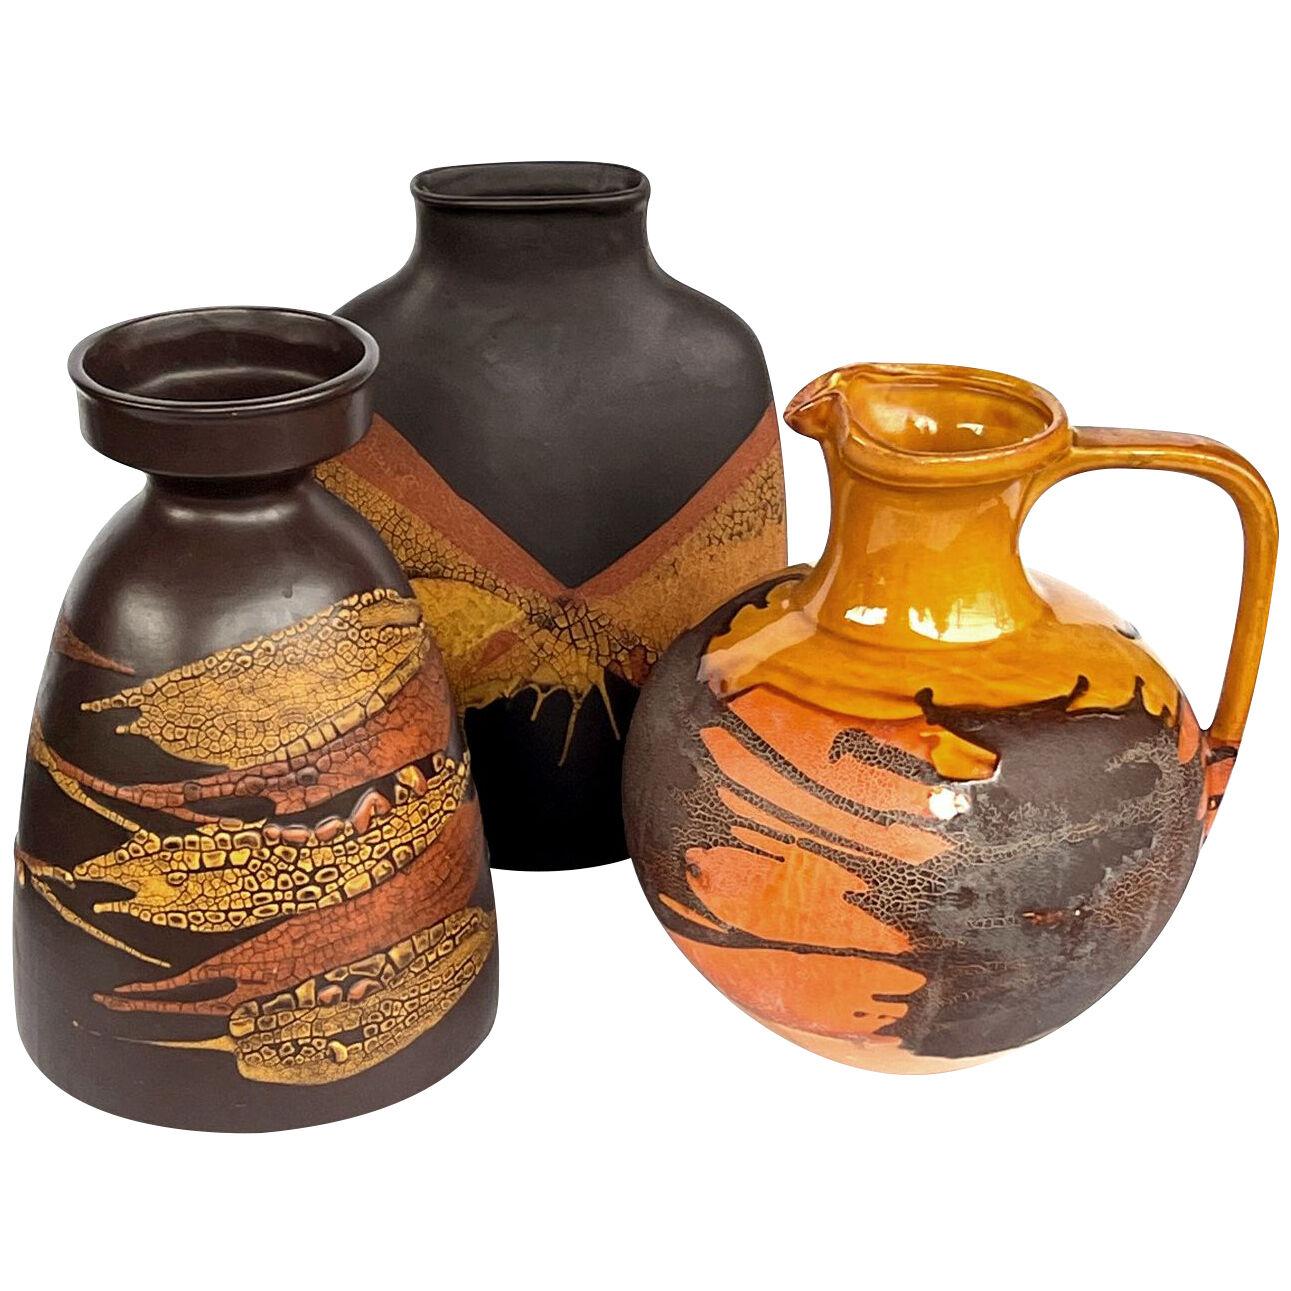 Set of 3 Royal Haeger Pottery Vesselsk with Brown, Ochre and Orange Glaze